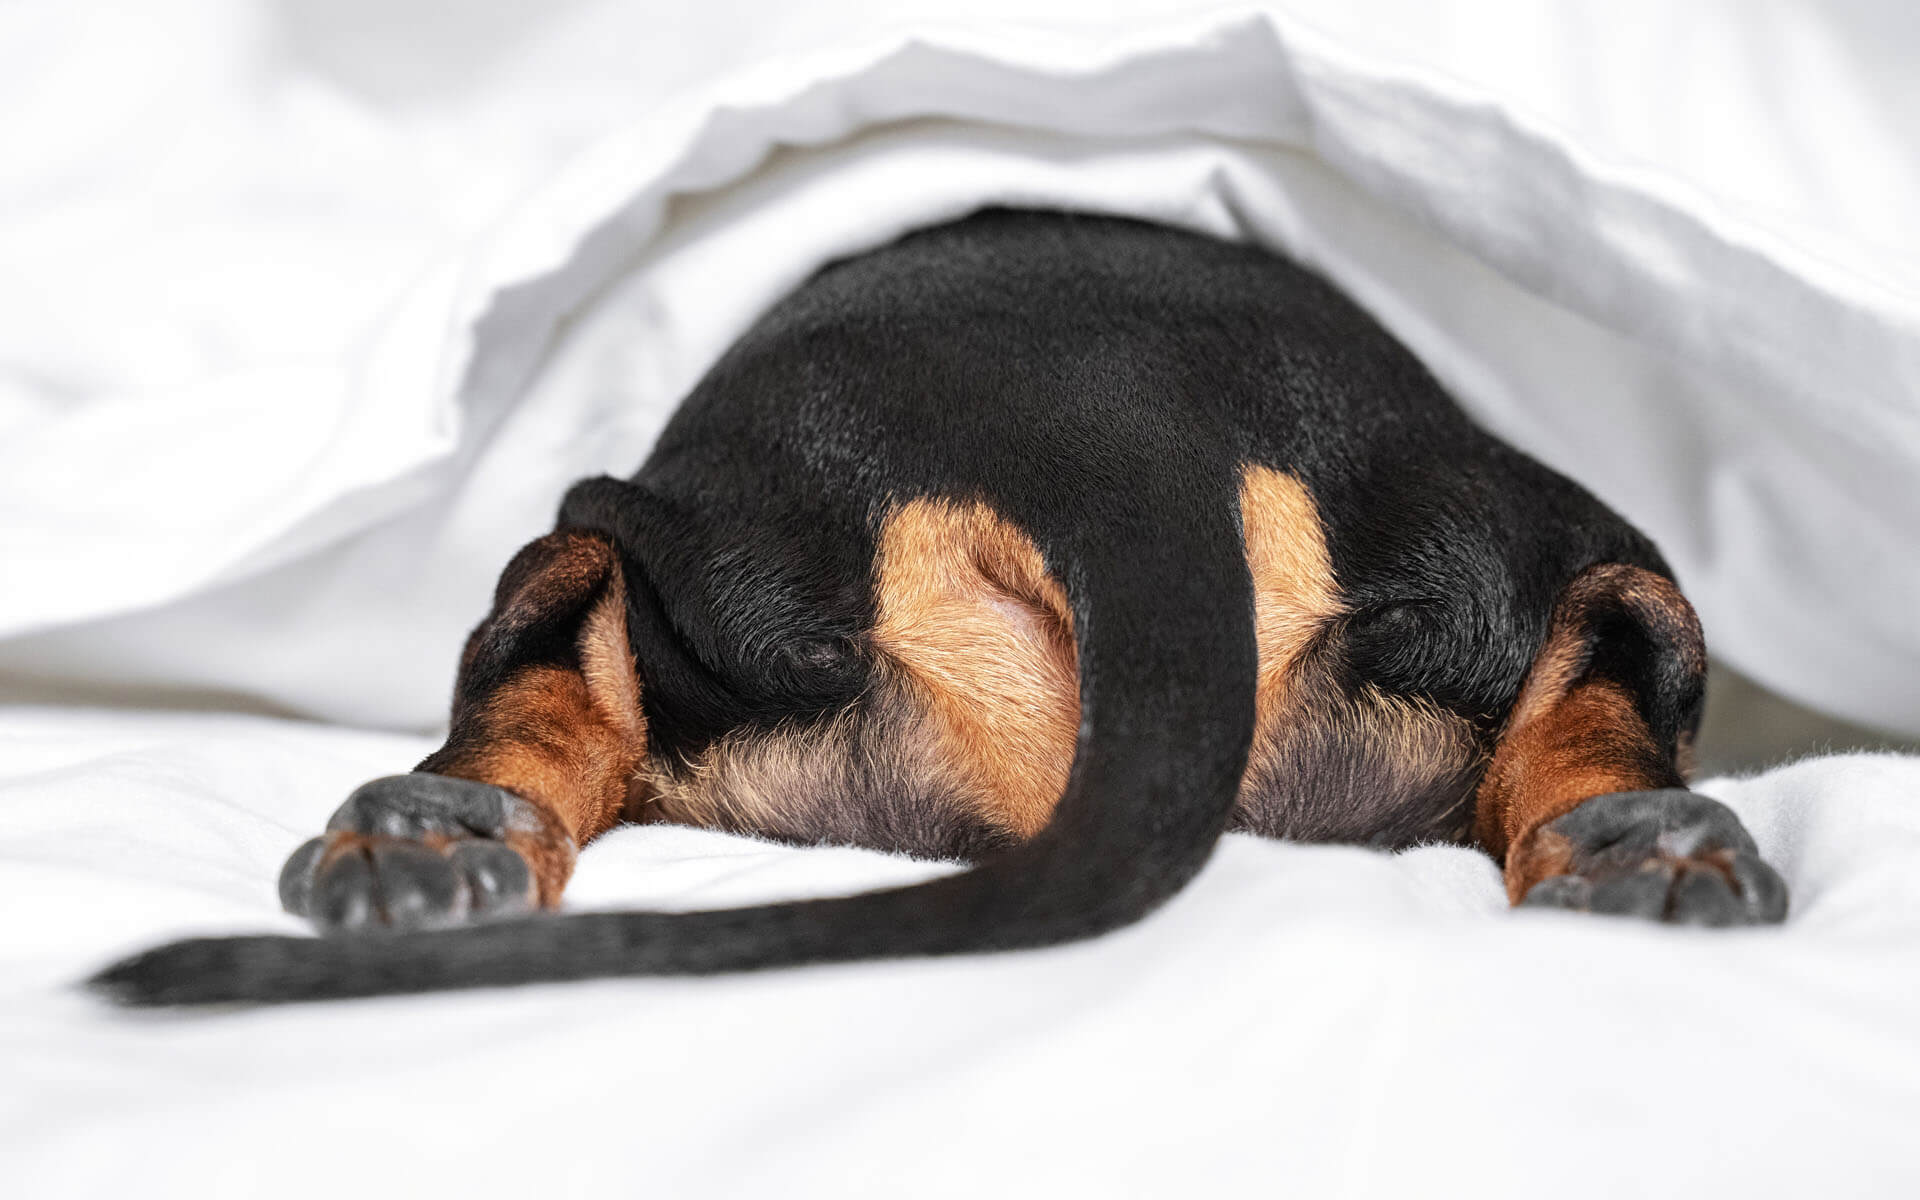 Dog hiding under sheets